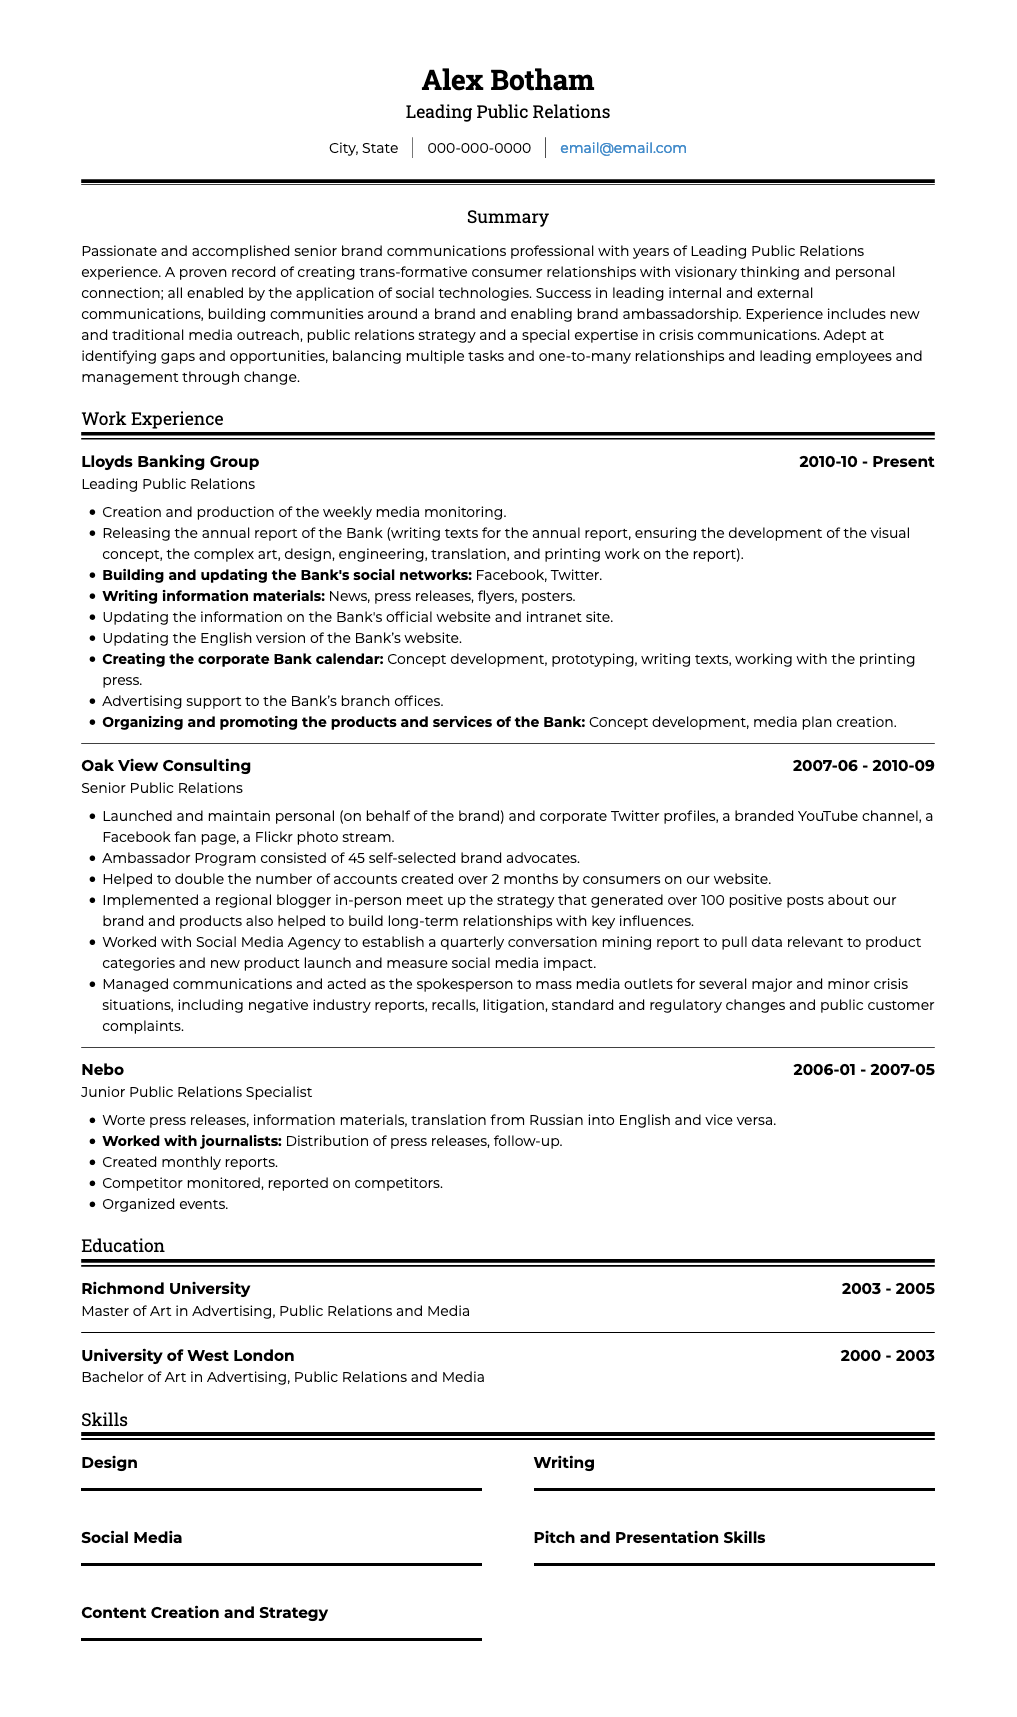 download-free-resume-23-ats-cv-template-free-download-gif